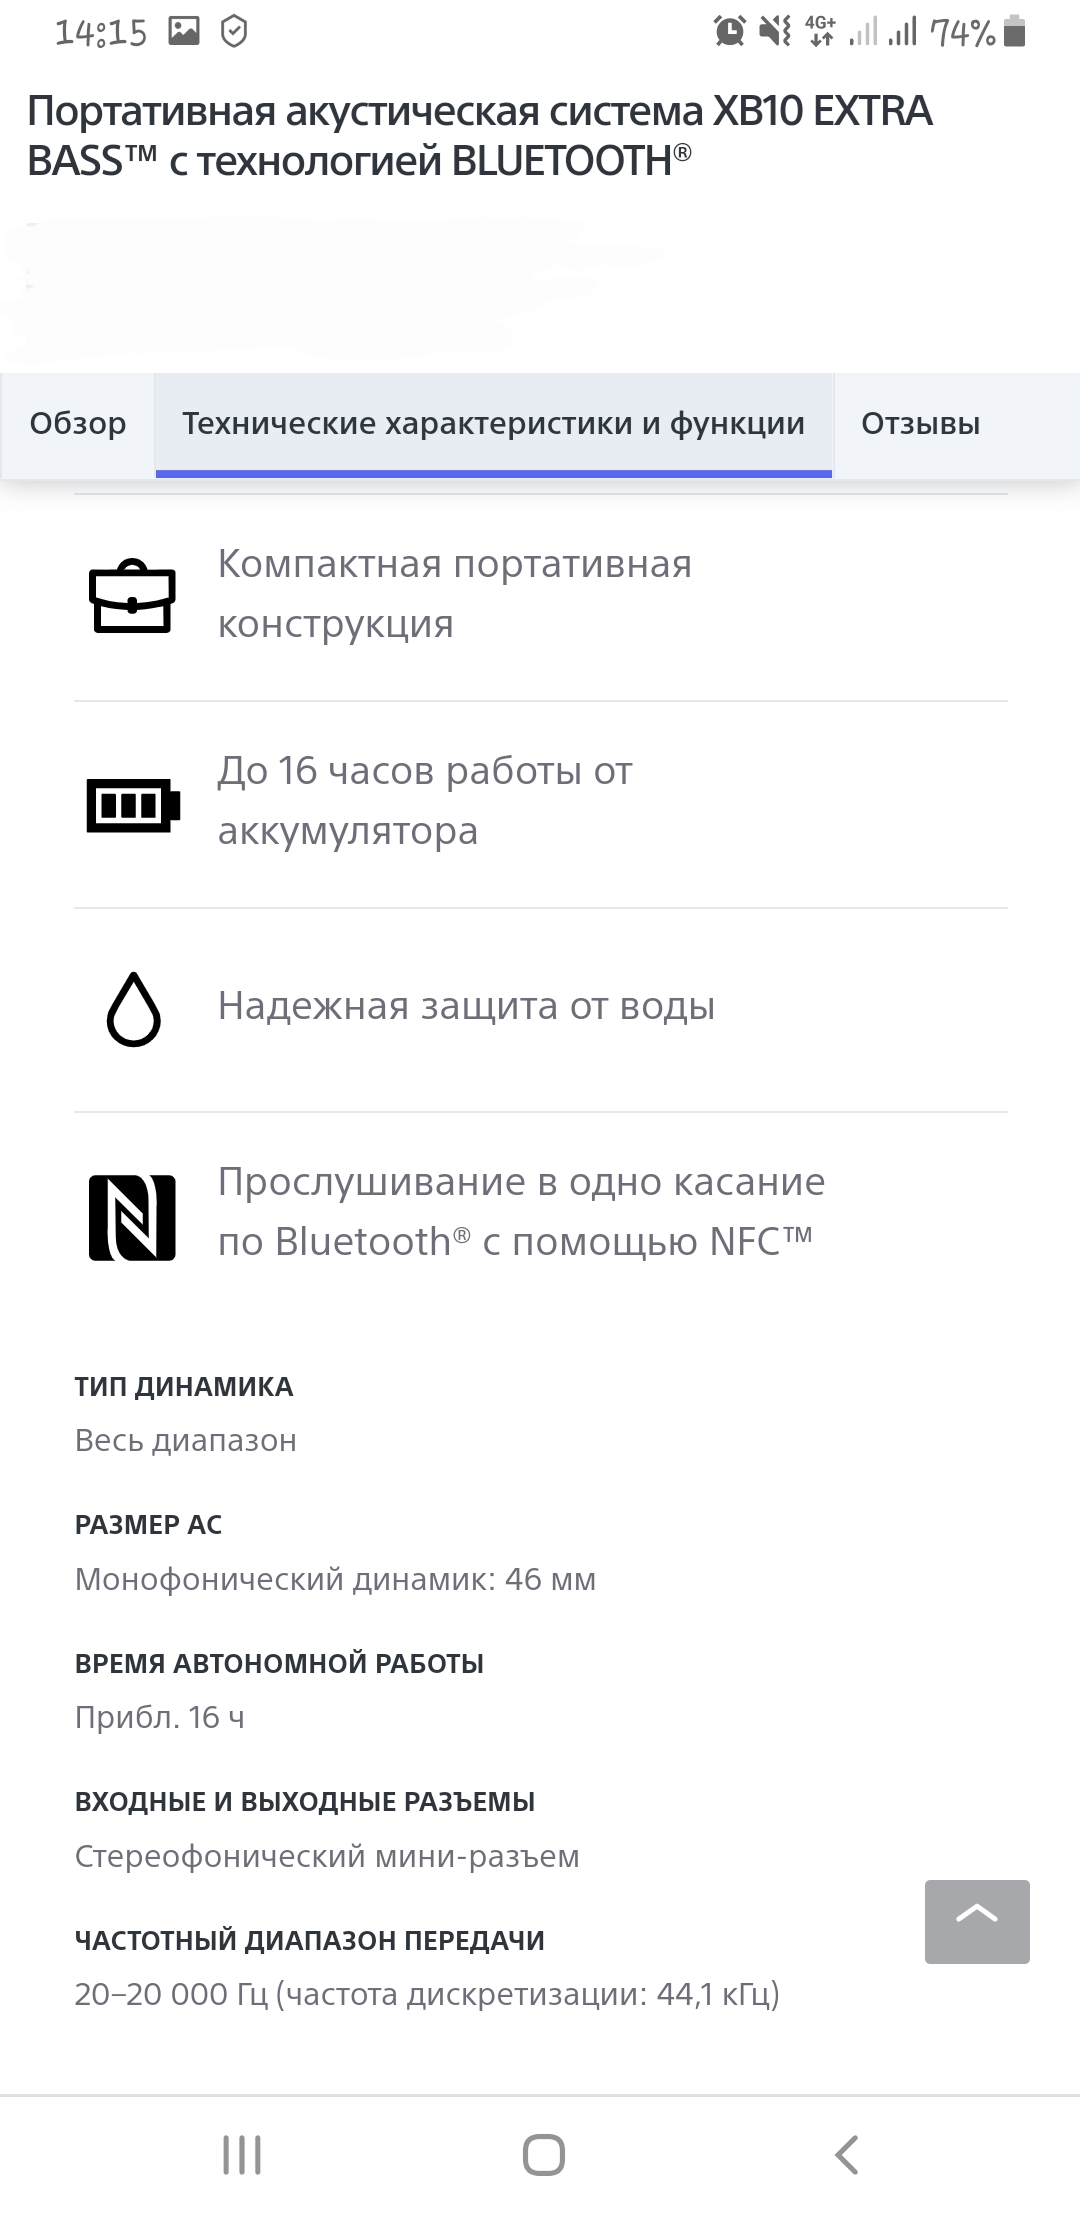 Саяногорск Инфо - screenshot_20210111-141611_chrome.jpg, Скачано: 102